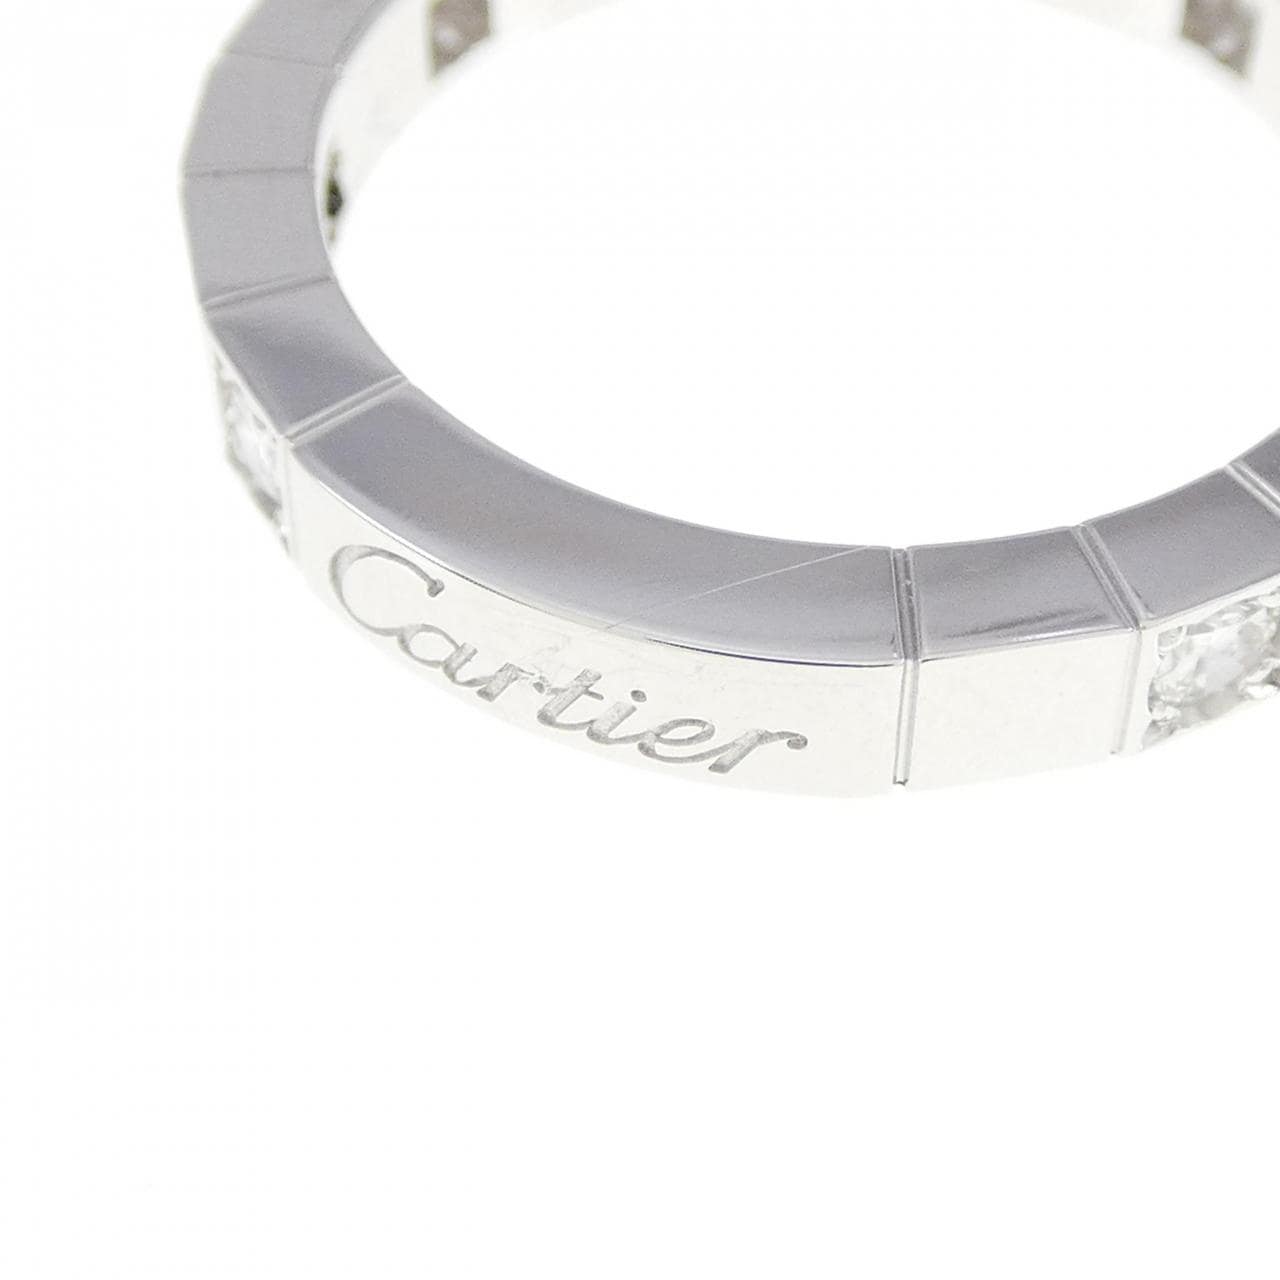 Cartier Lanieres half diamond ring